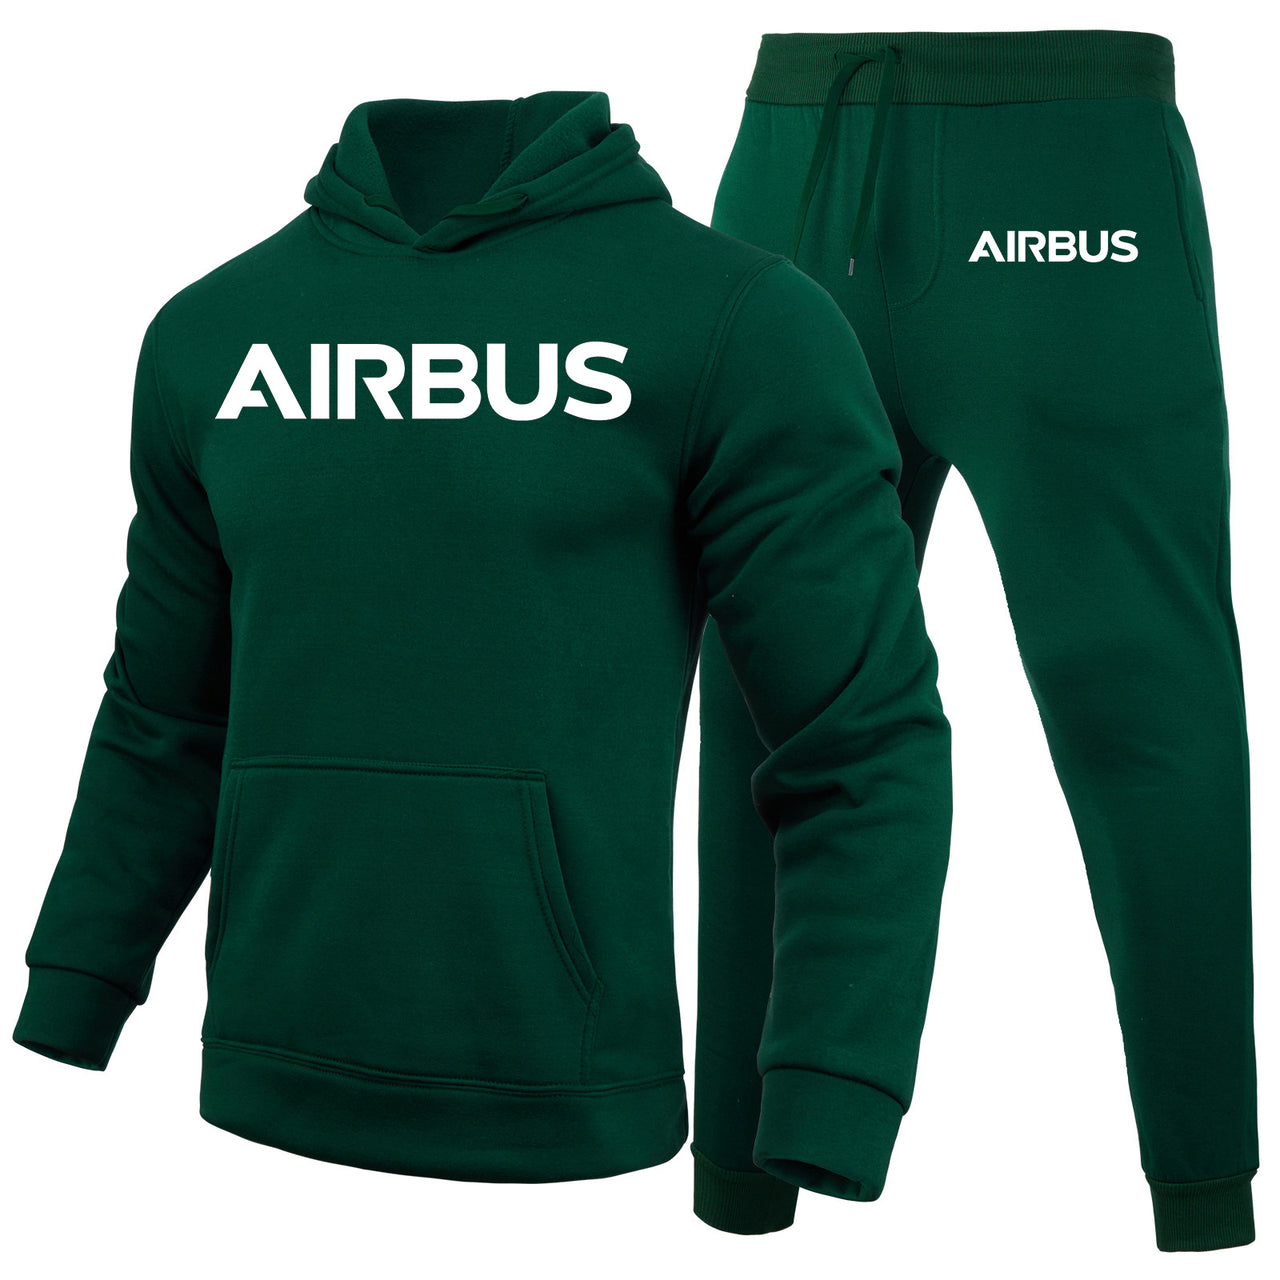 Airbus & Text Designed Hoodies & Sweatpants Set